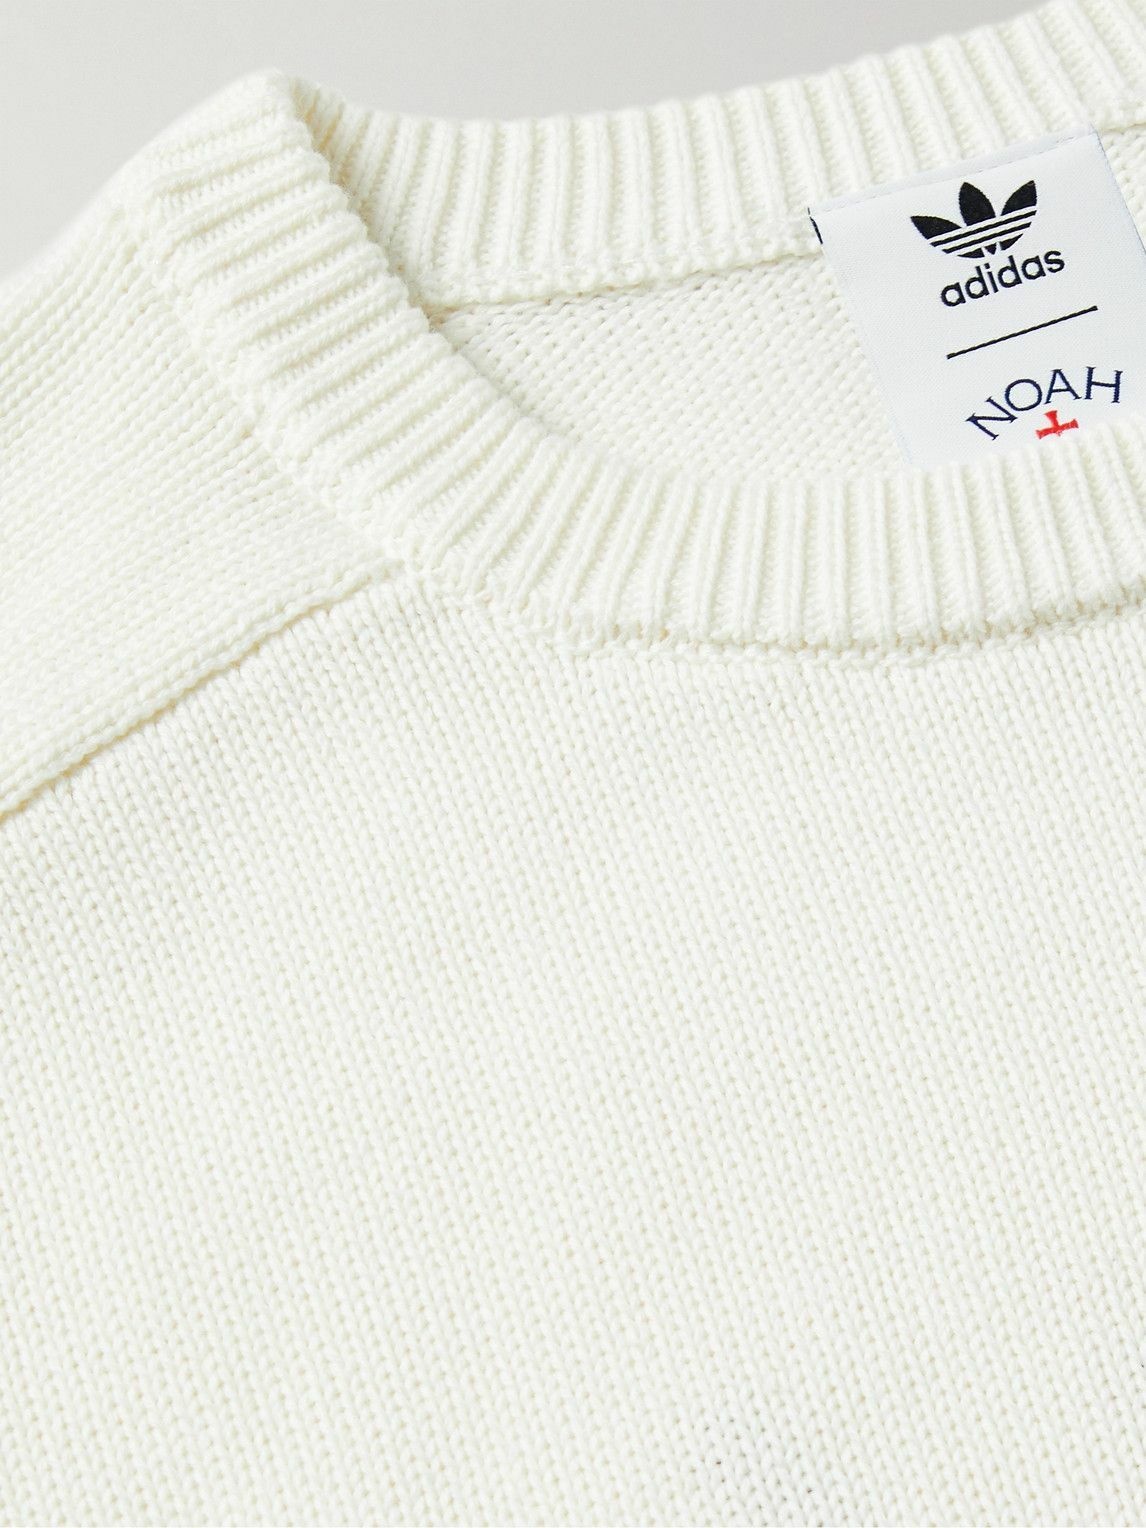 adidas Consortium - Noah Logo-Embroidered Crochet-Knit Cotton